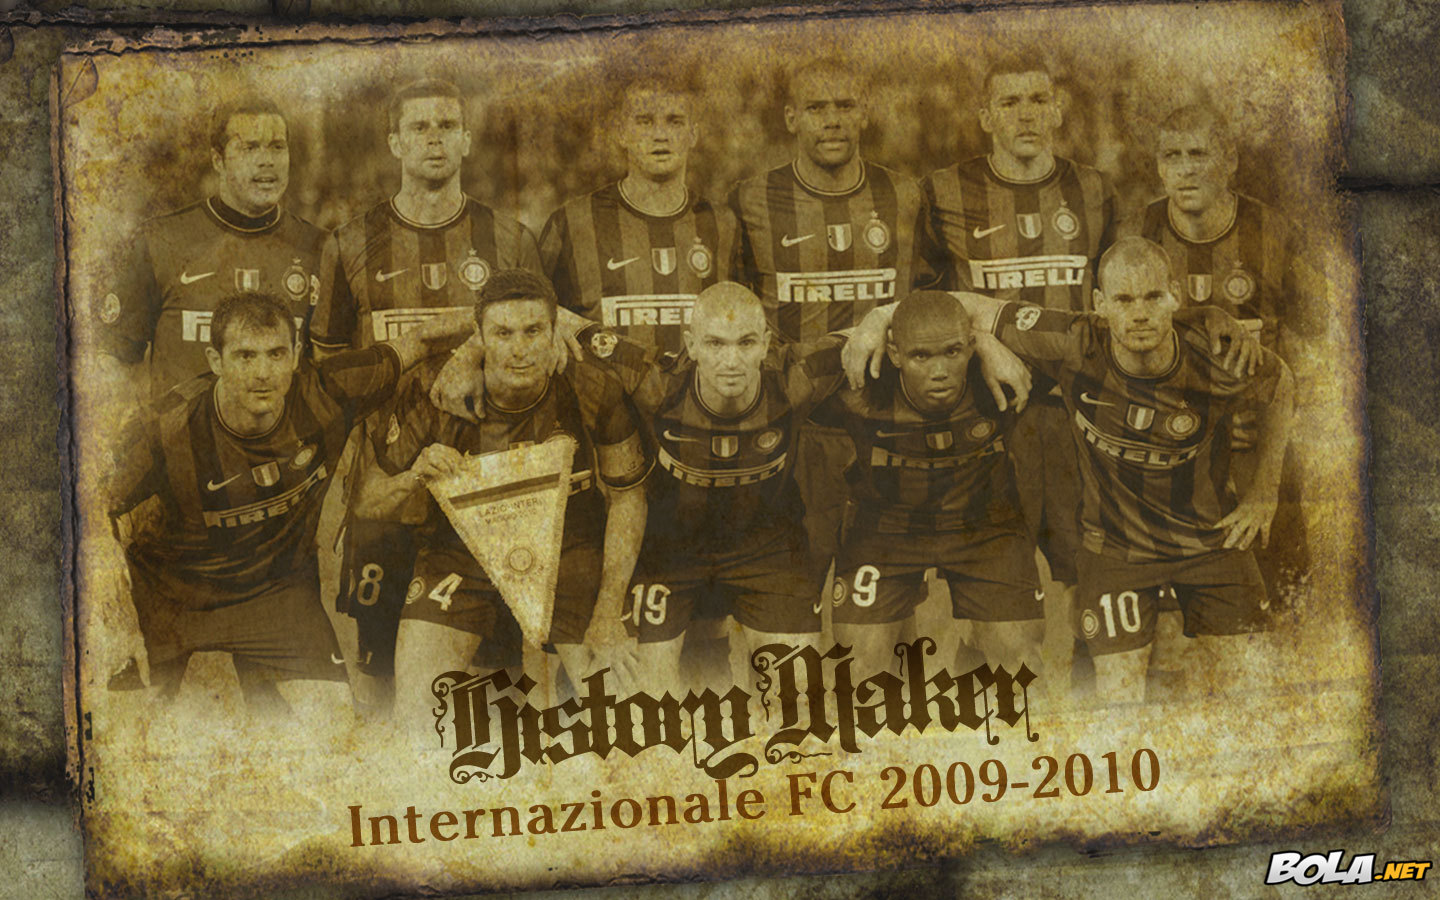 Deskripsi : Wallpaper Inter Milan, size: 1440x900